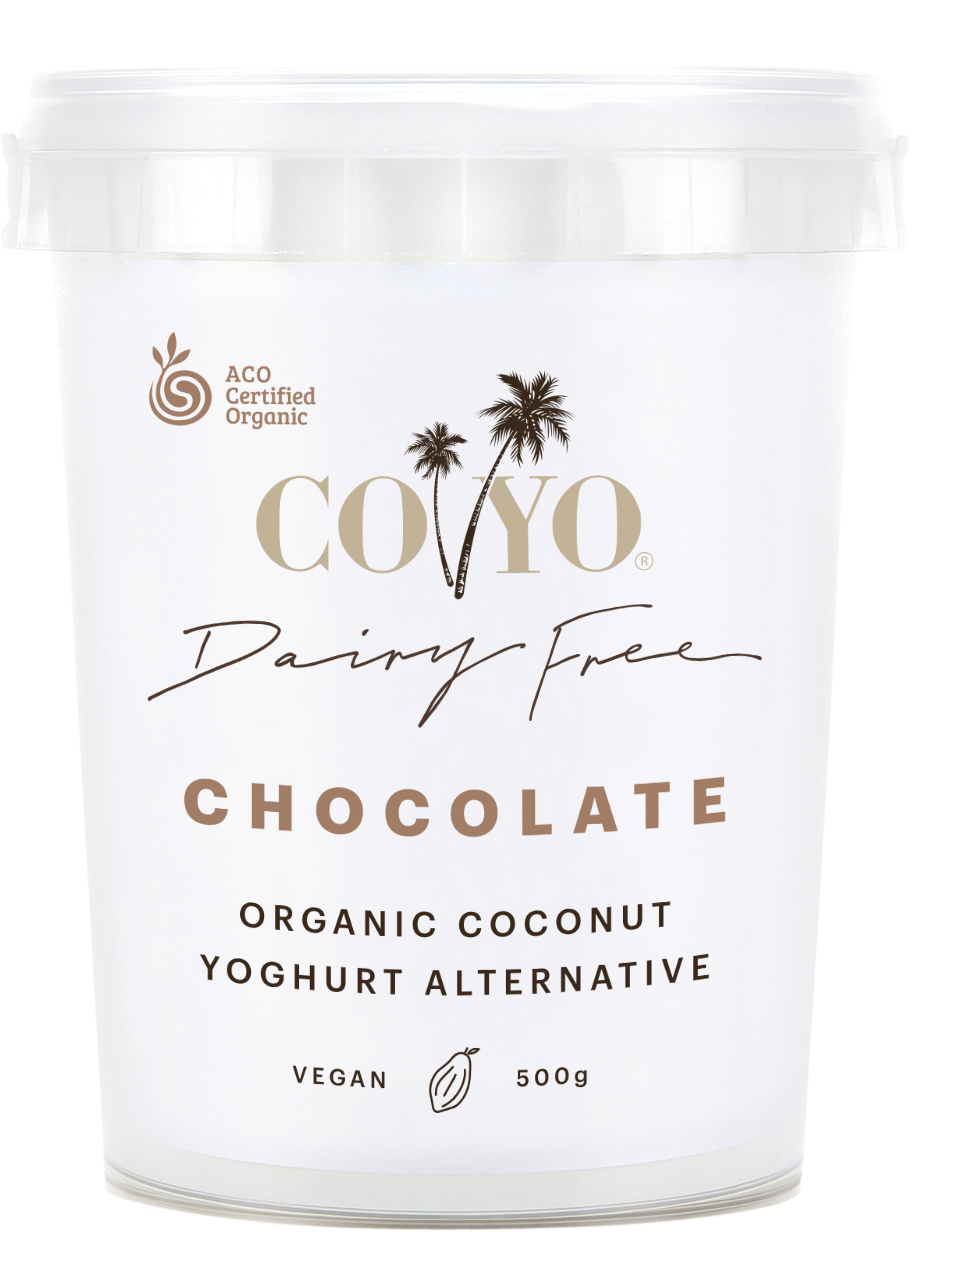 CO YO Chocolate Coconut Yoghurt